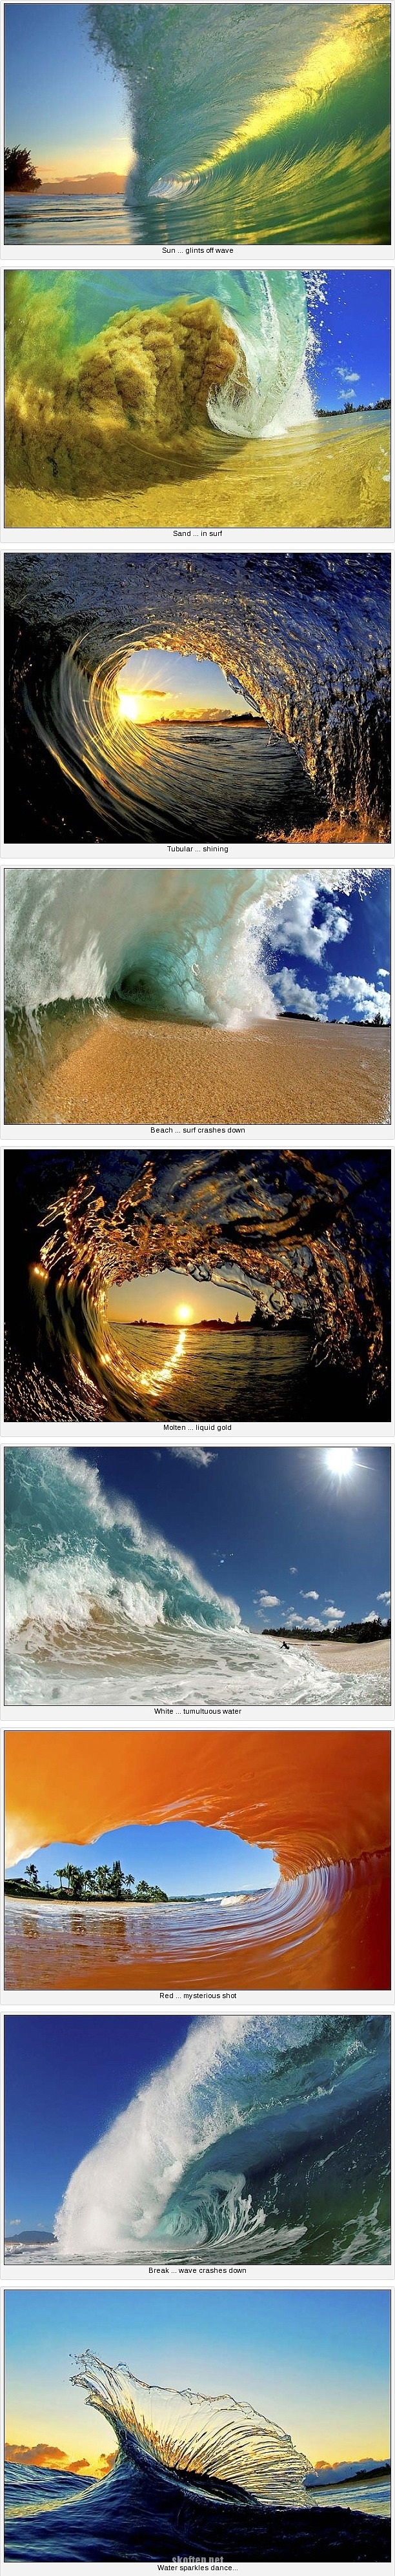 Some amazing waves